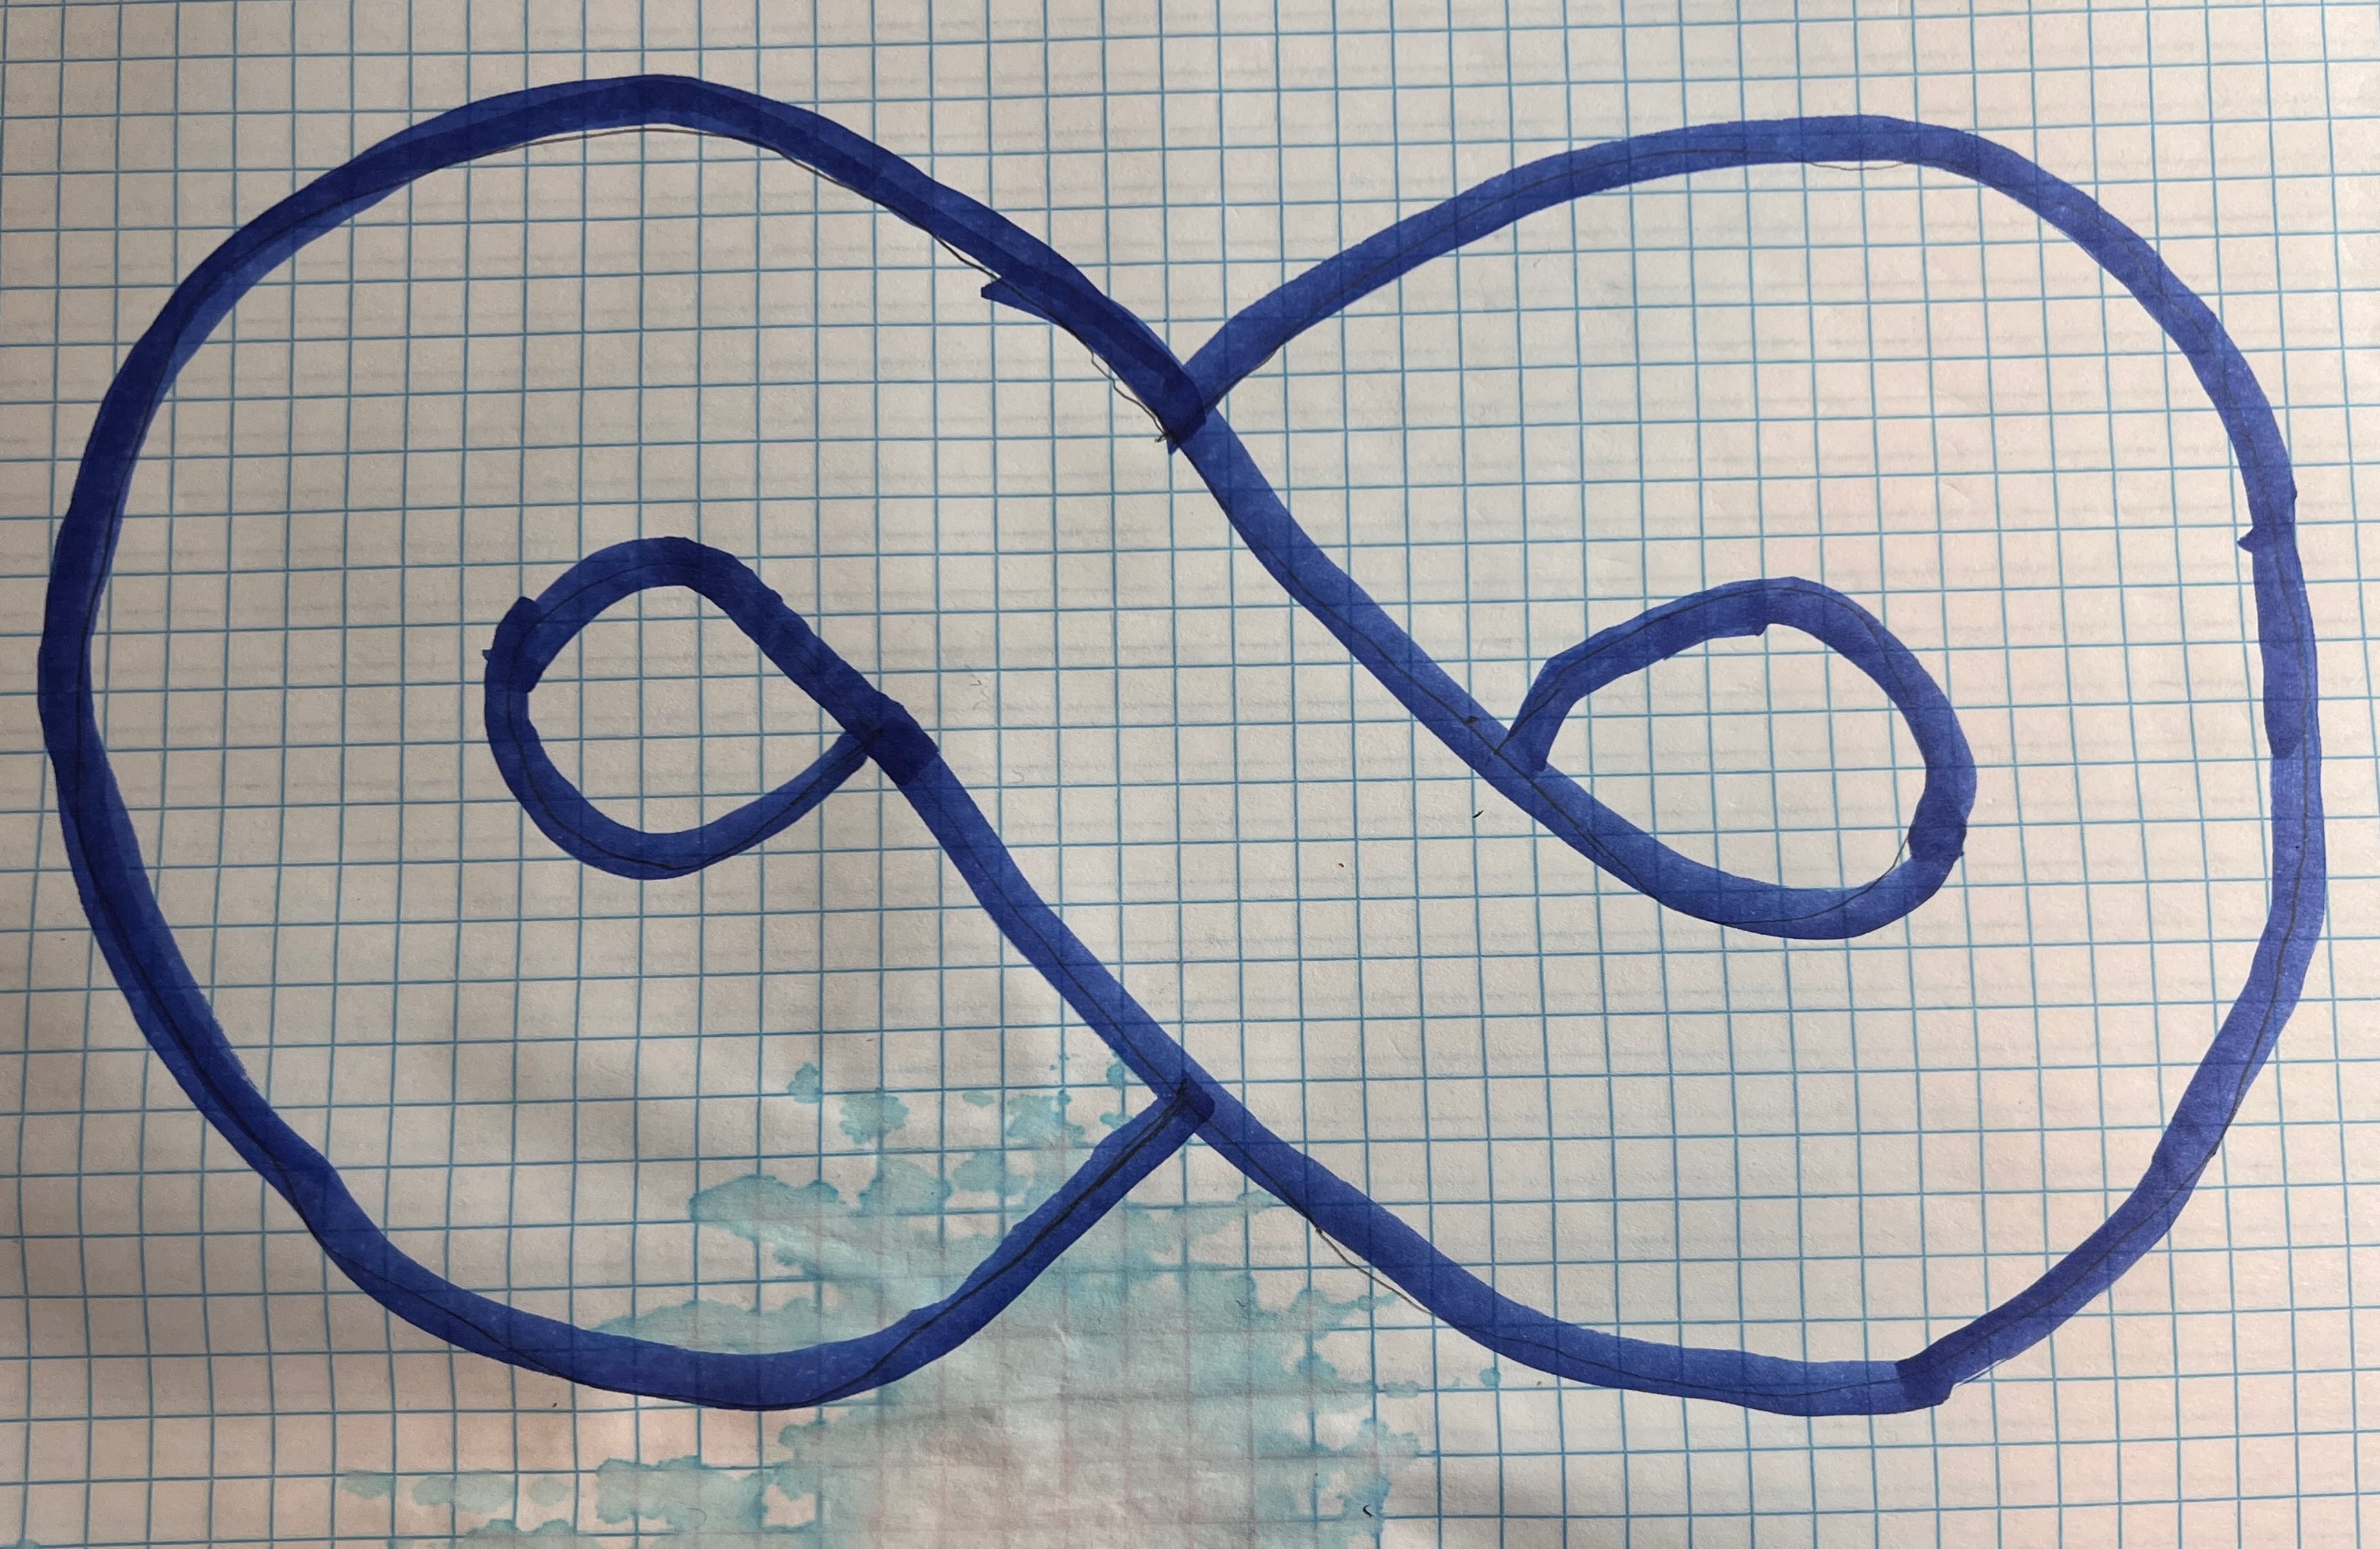 a handdrawn infinity symbol